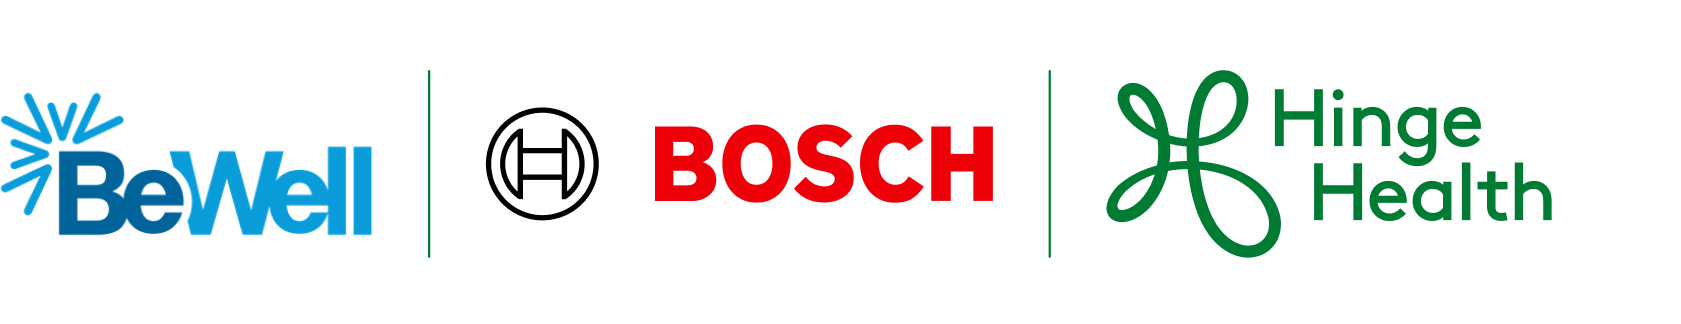 Robert Bosch | HingeHealth